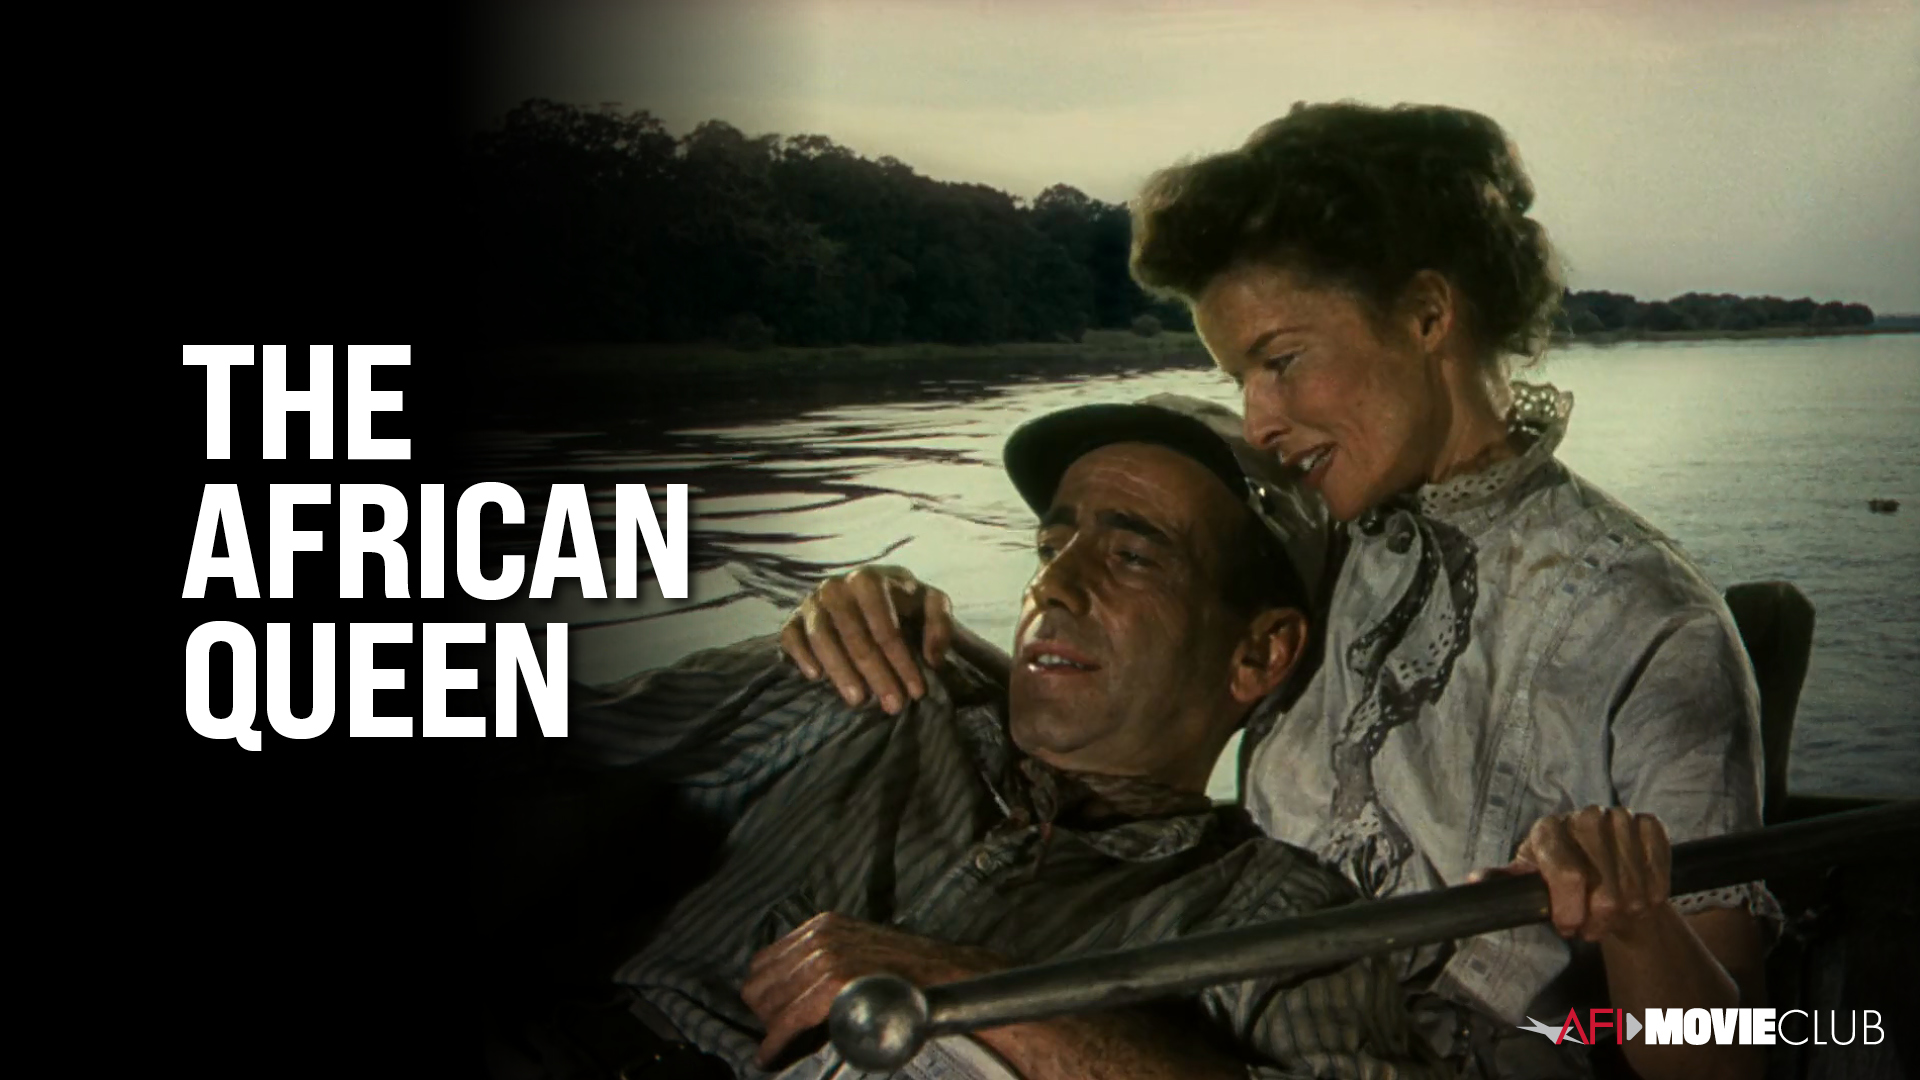 The African Queen Film Still - Humphrey Bogart and Katharine Hepburn